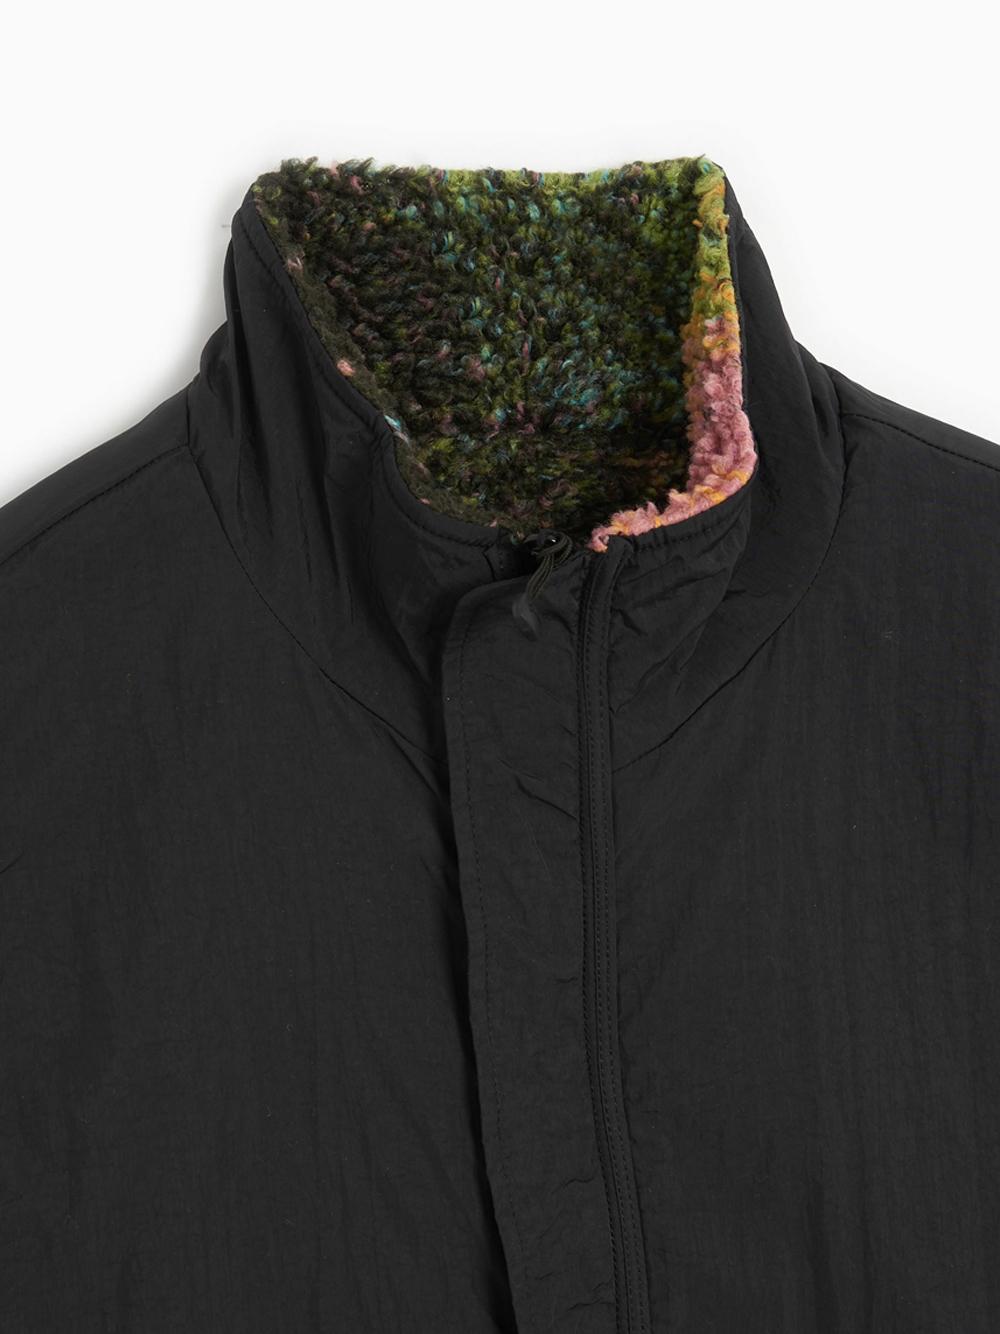 Stussy Jacquard Dyed Sherpa Vest Multicolor for Men | Lyst